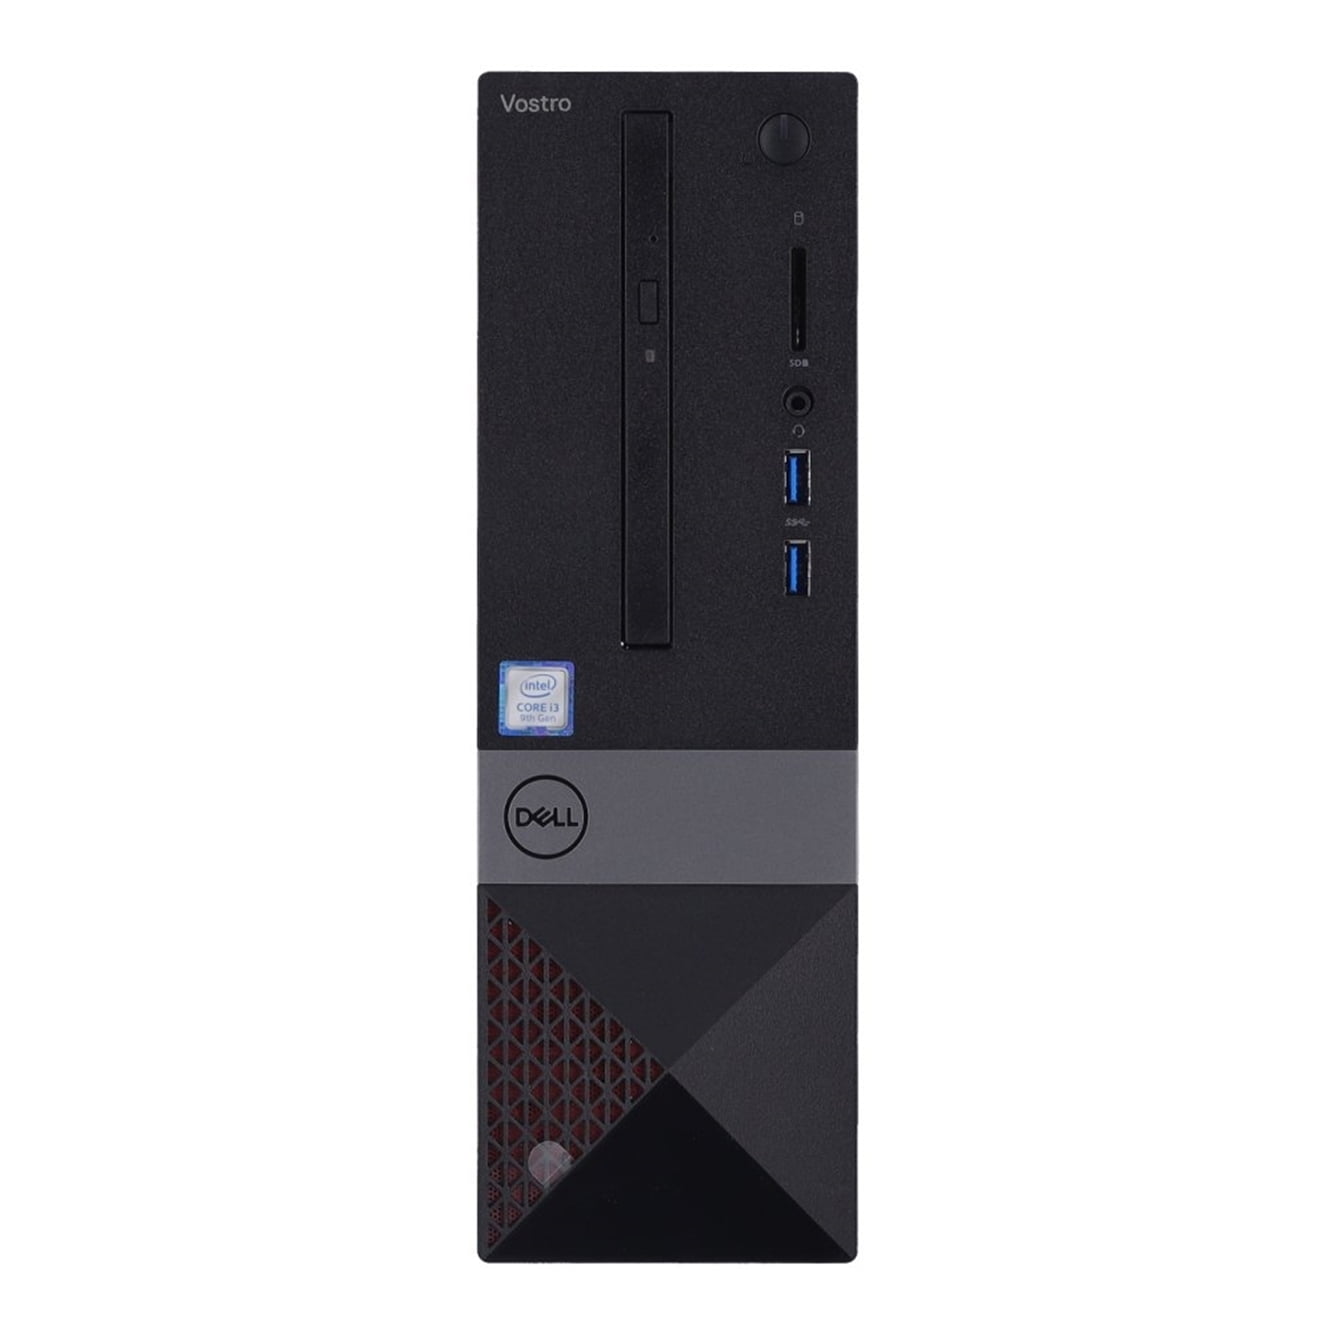 Dell Vostro 3471 Intel Core i3-9100 X4 3.6GHz 4GB 1TB Win10, Black (Used -  Blemished)